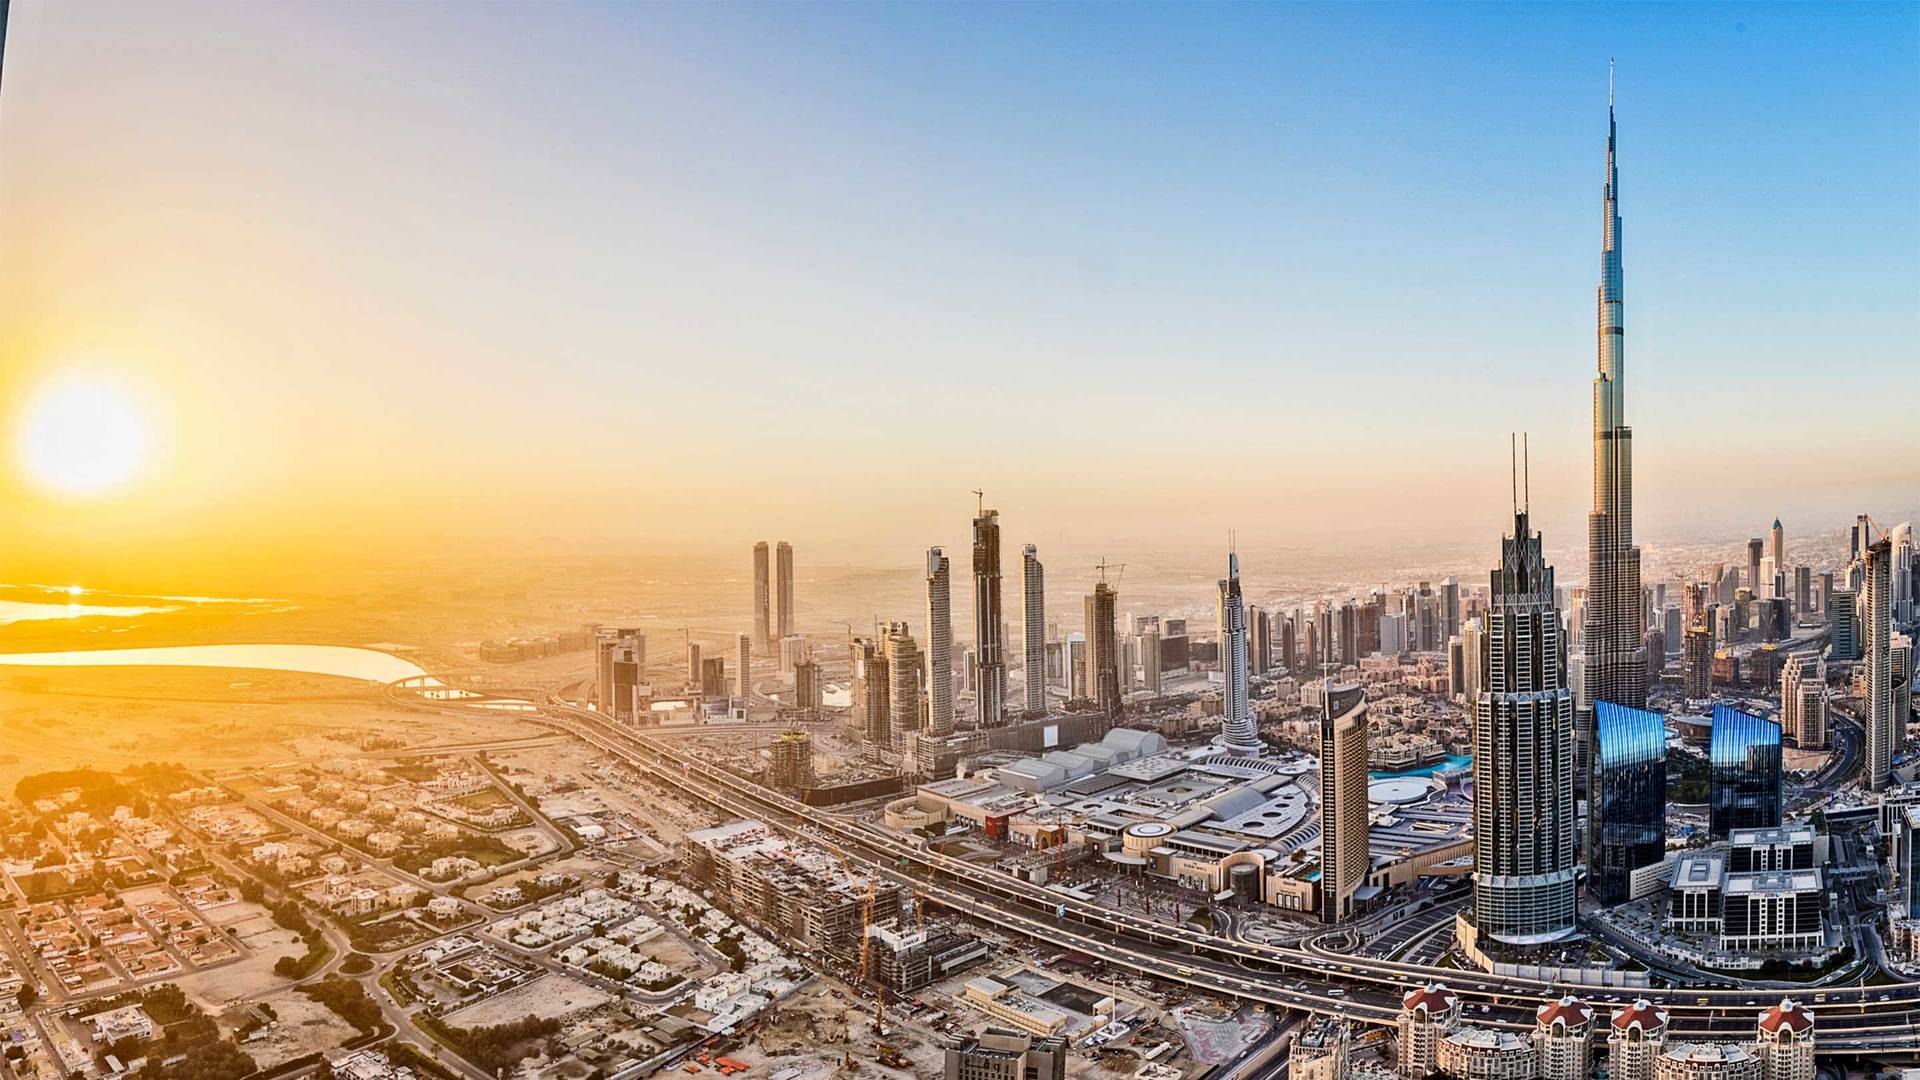 169 Восход солнца в Дубае — wwwistockphotocom — Дубай во время восхода солнца 911607822250989577